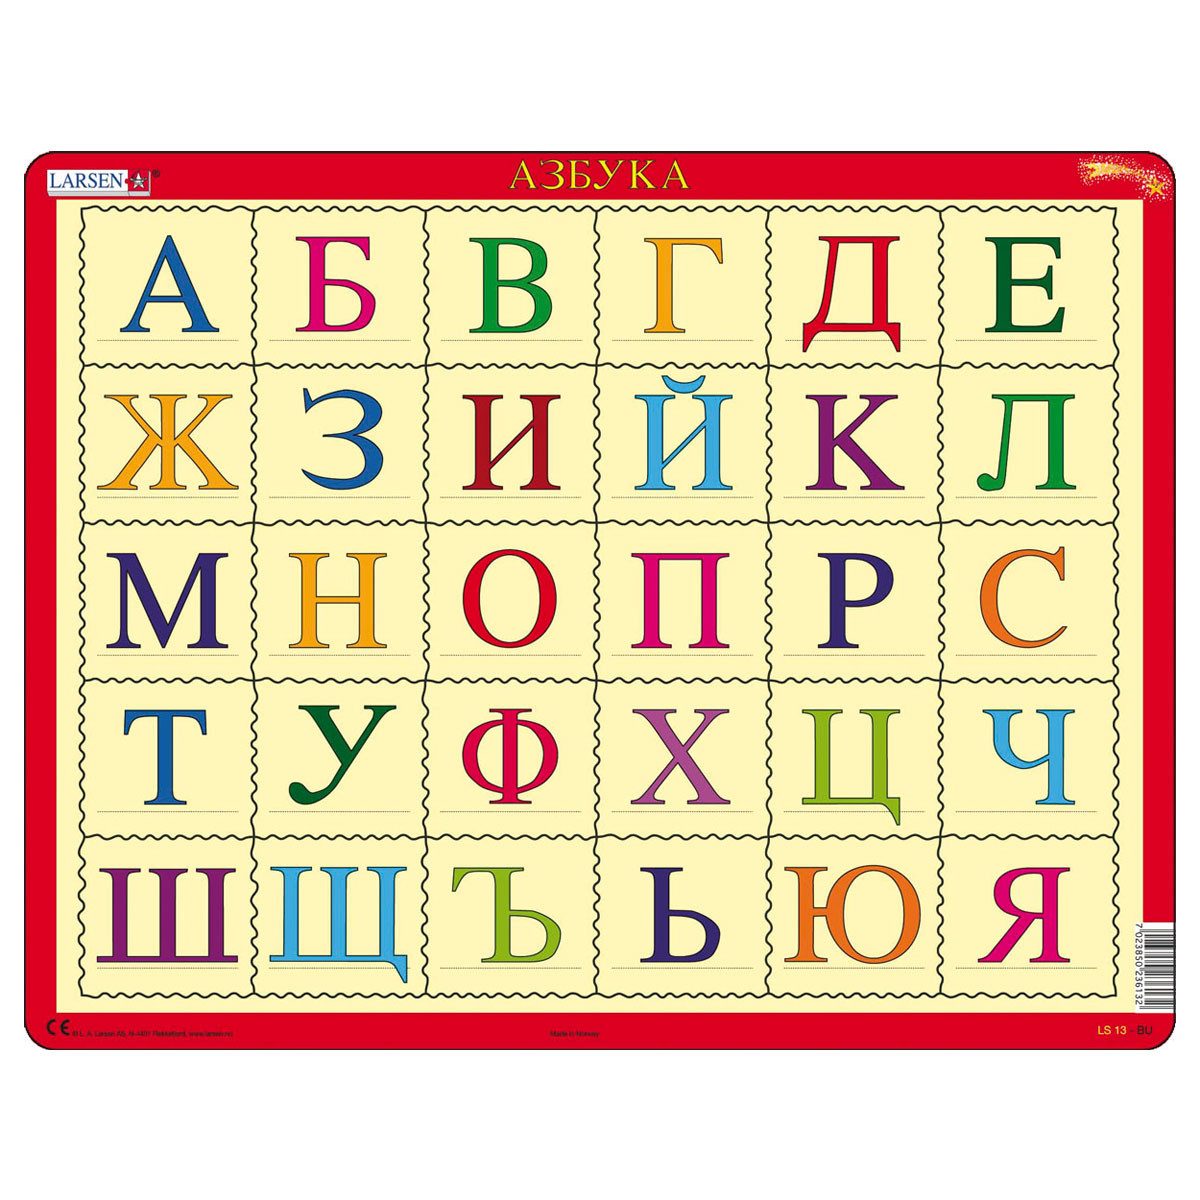 Bulgarian alphabet